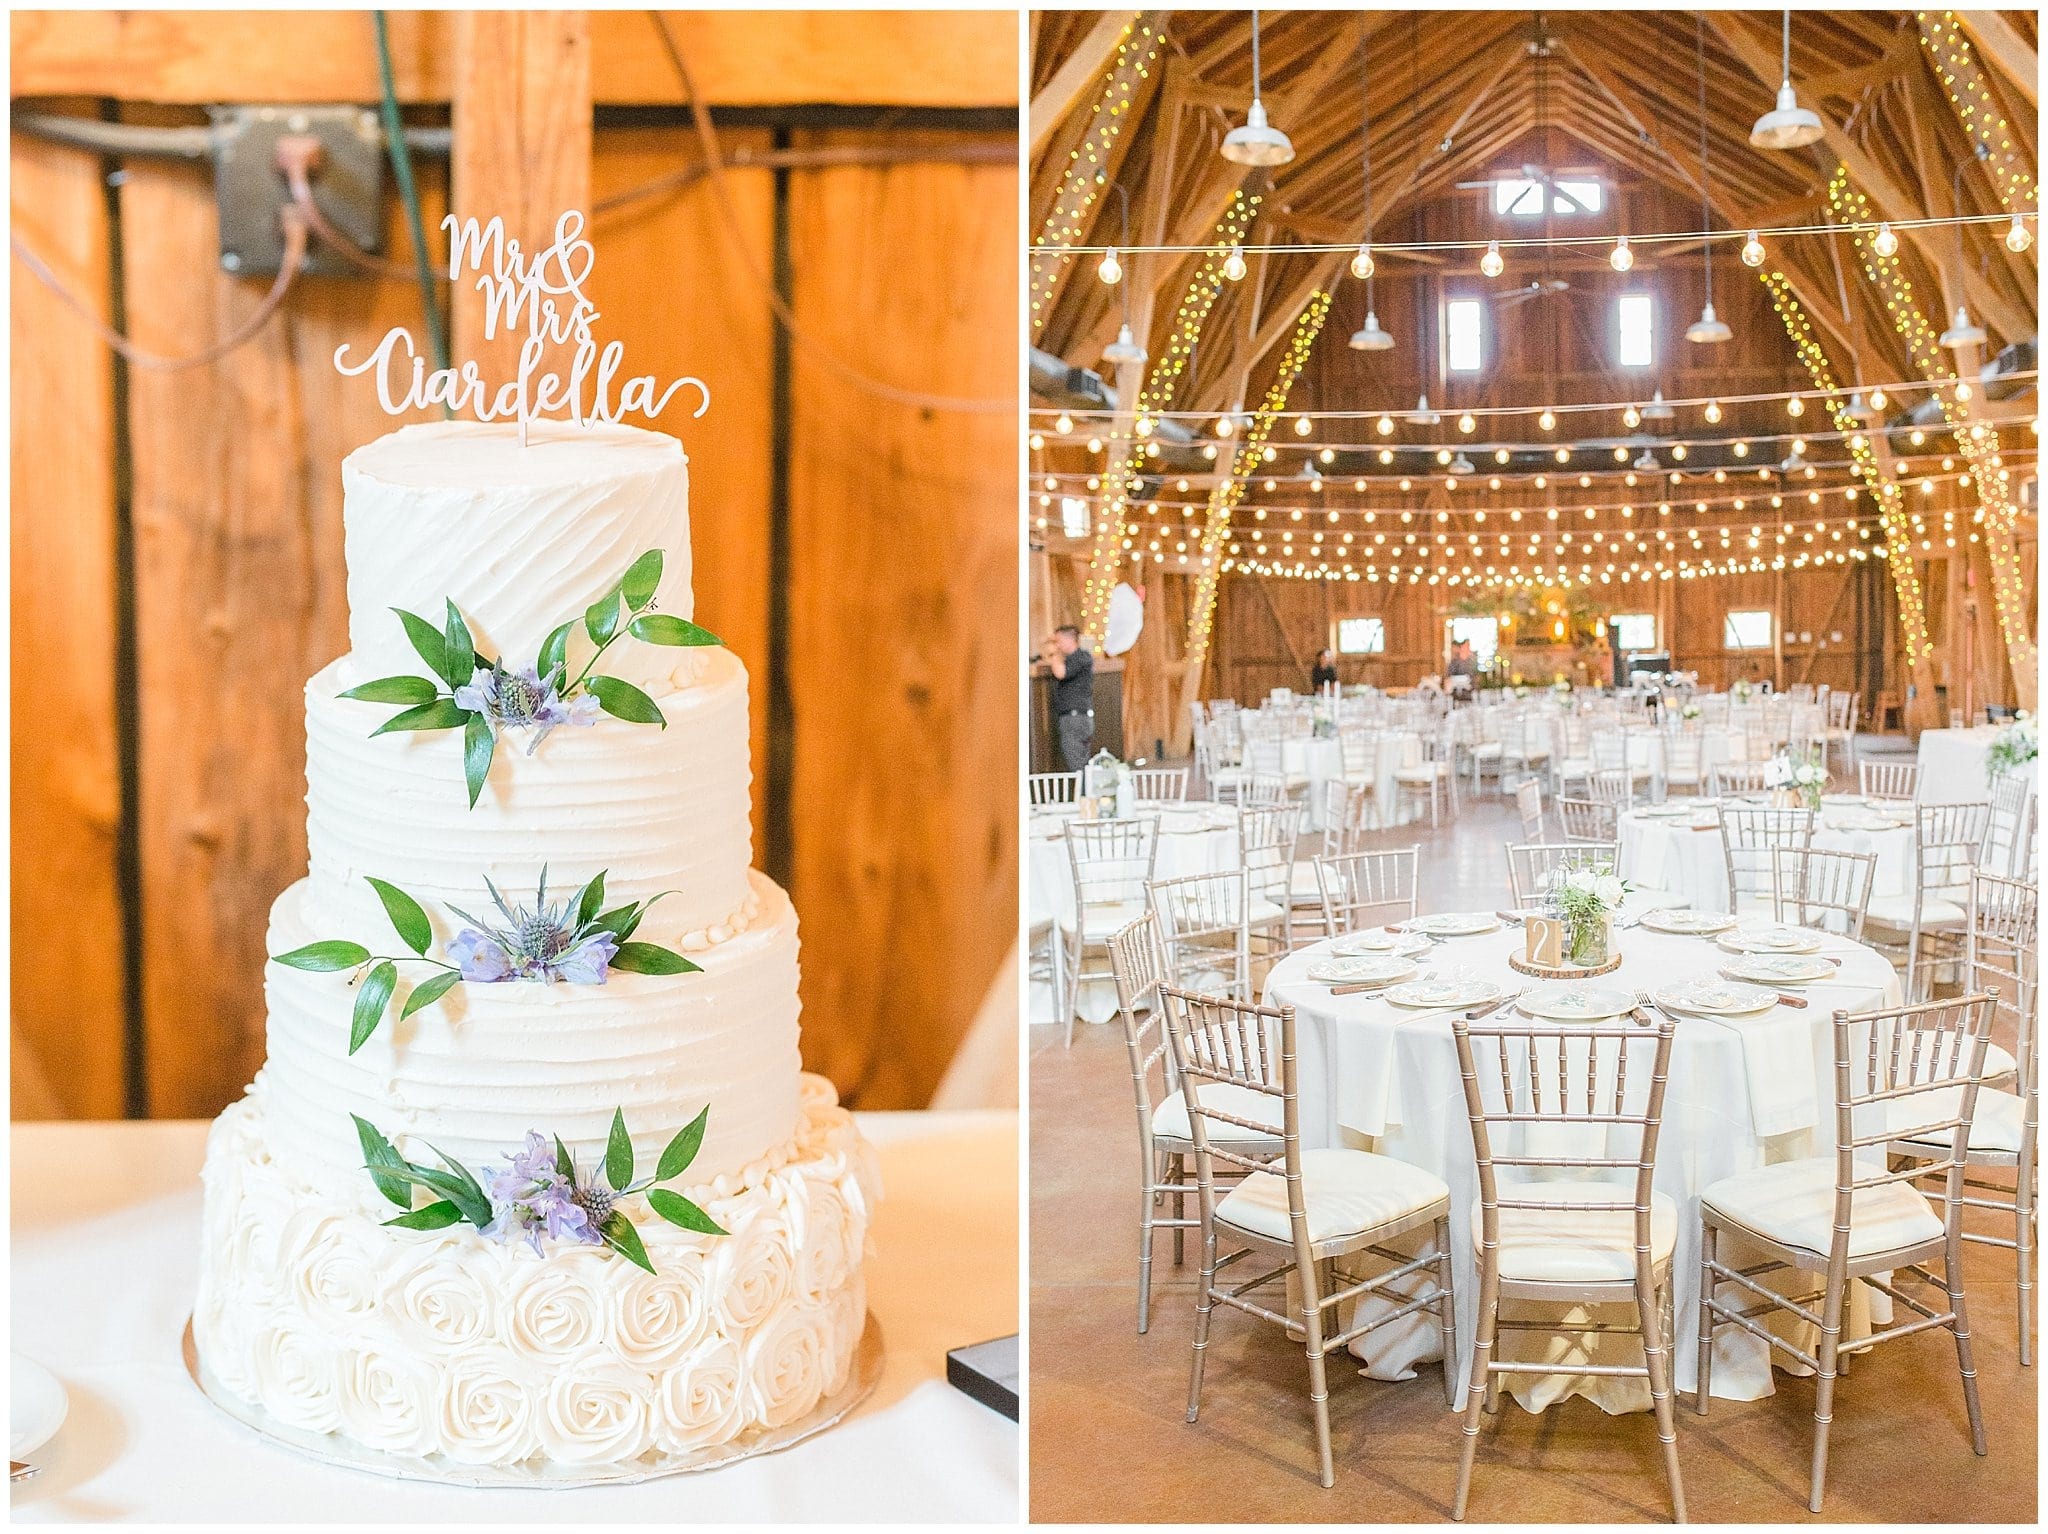 Windmill Winery Reception Decor Wedding Cake